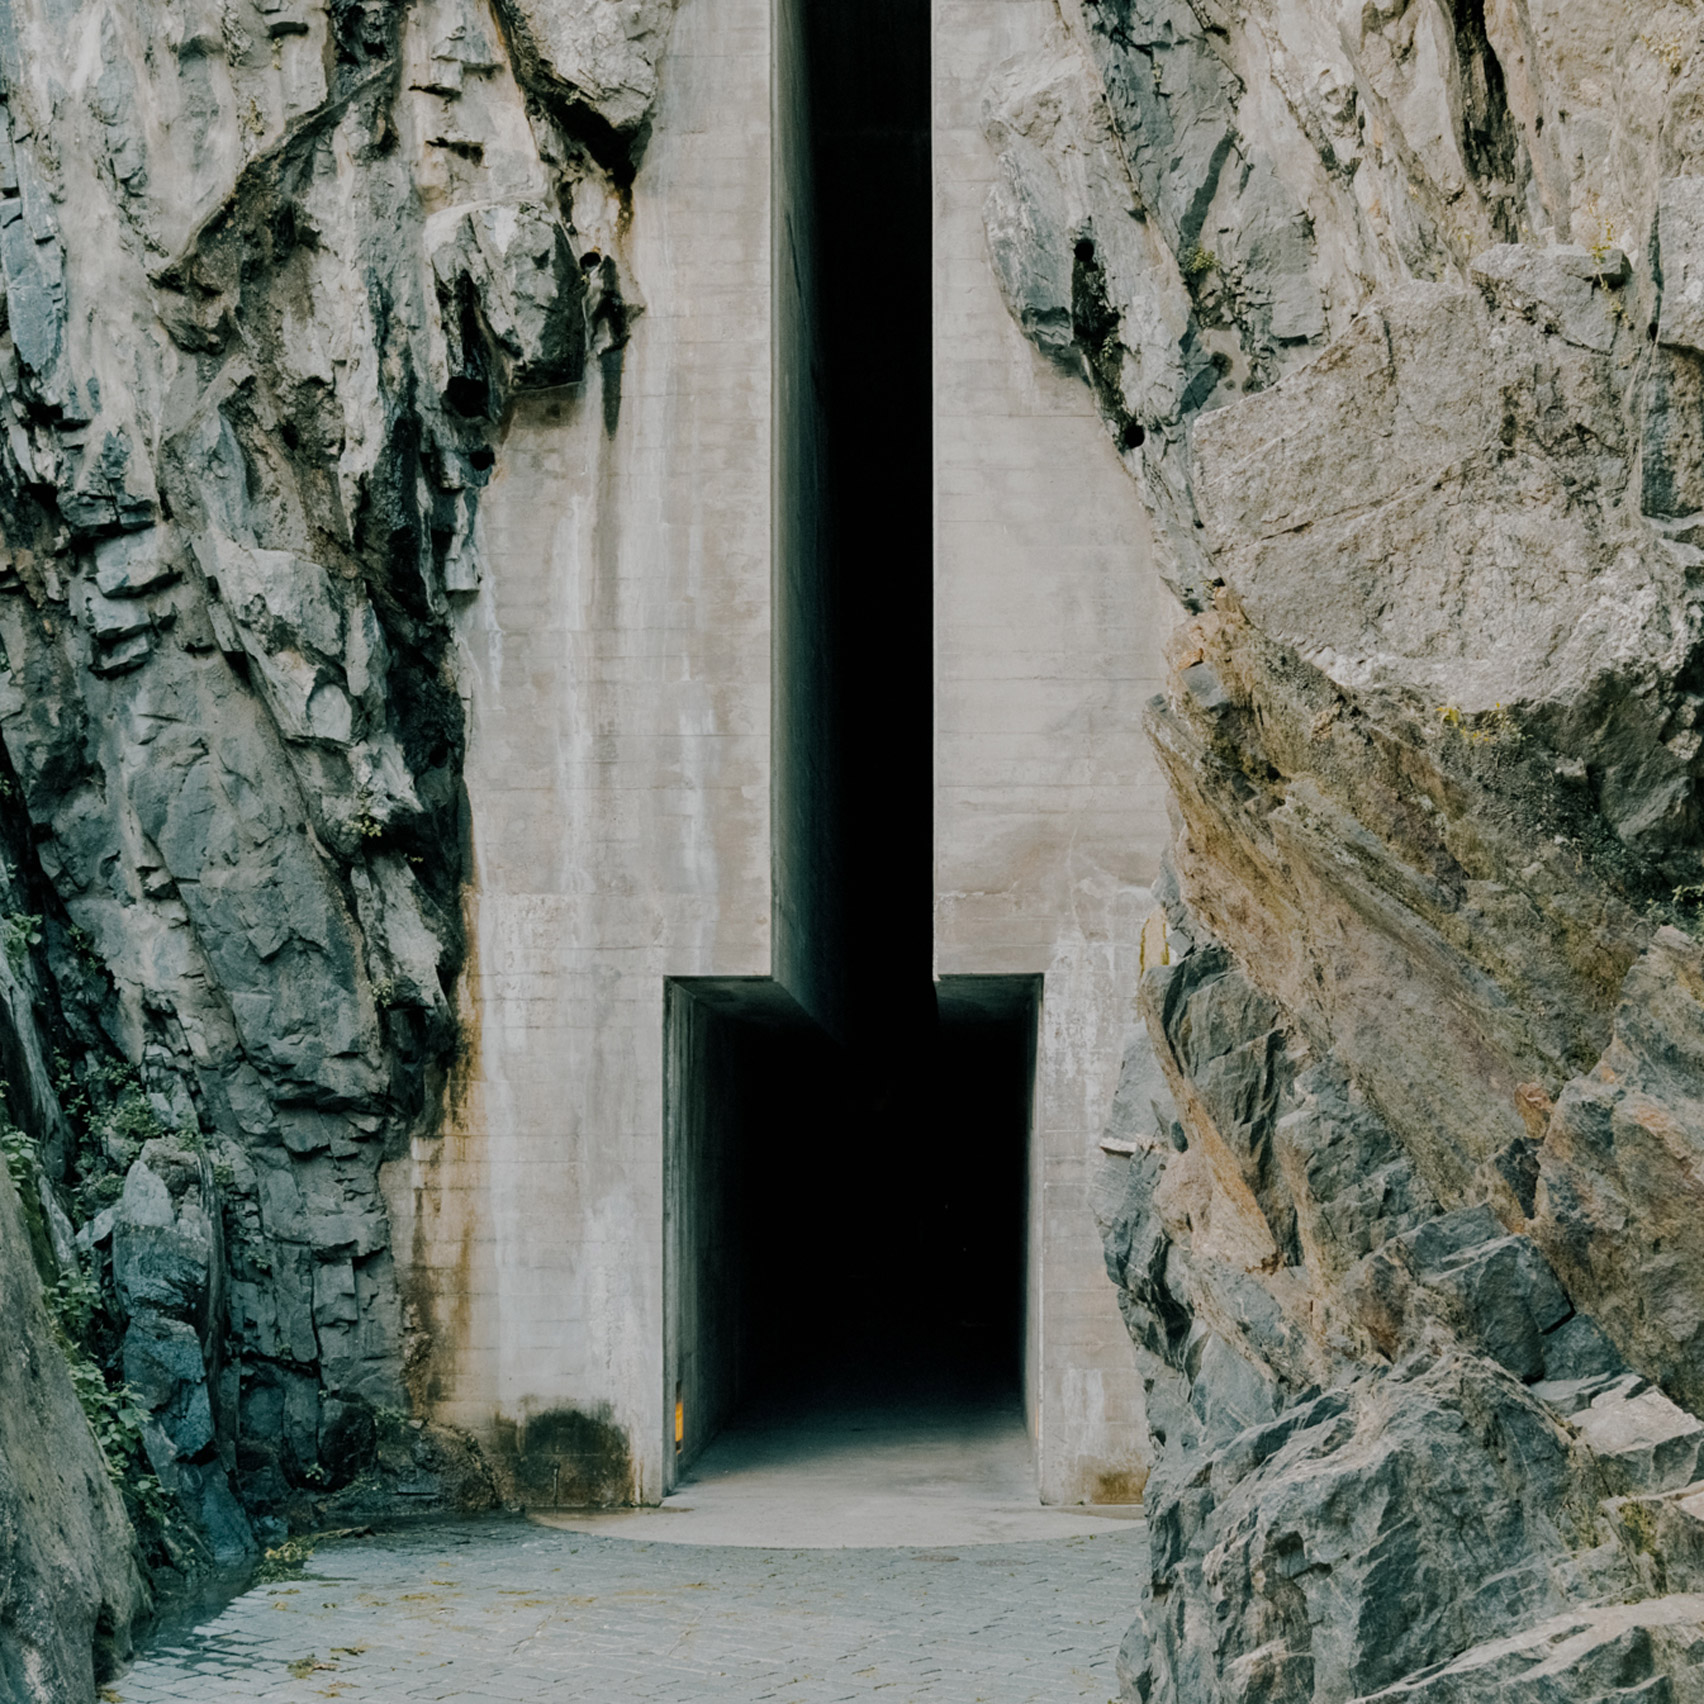 The entrance to Castelgrande by Aurelio Galfetti, captured by Simone Bossi